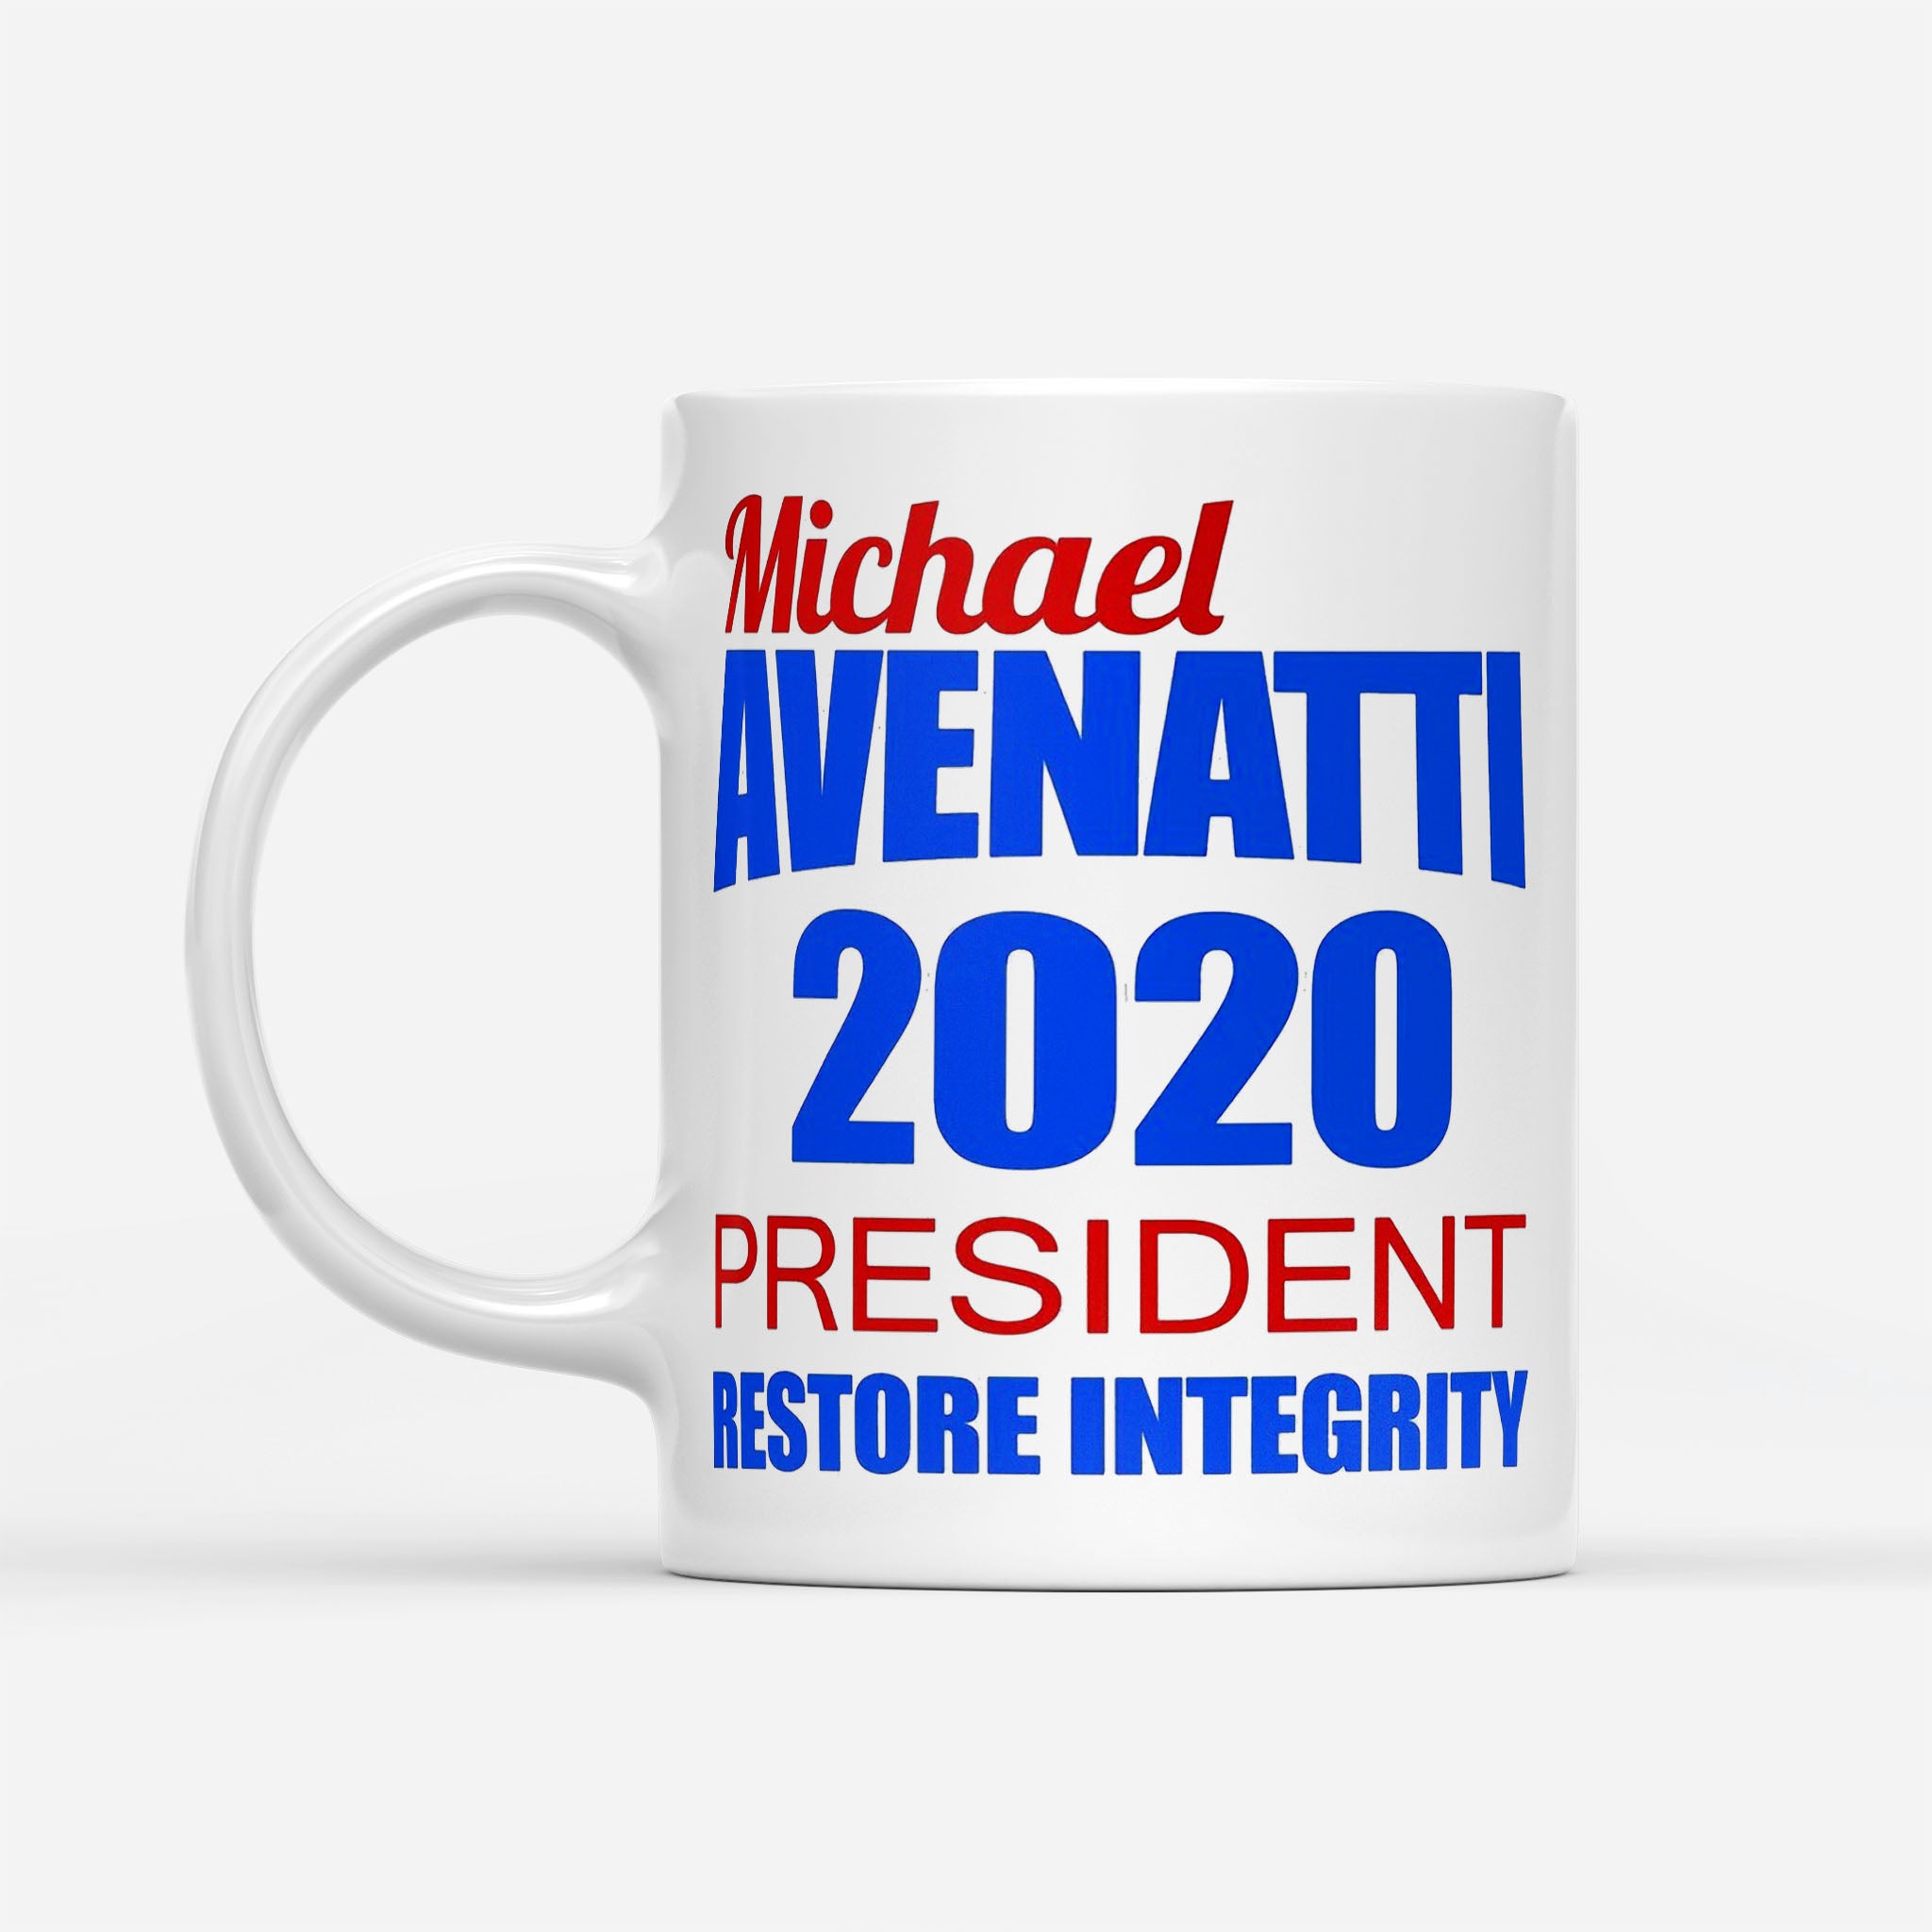 James Woods Michael Avenatti 2020 President Restore Integrity - White Mug